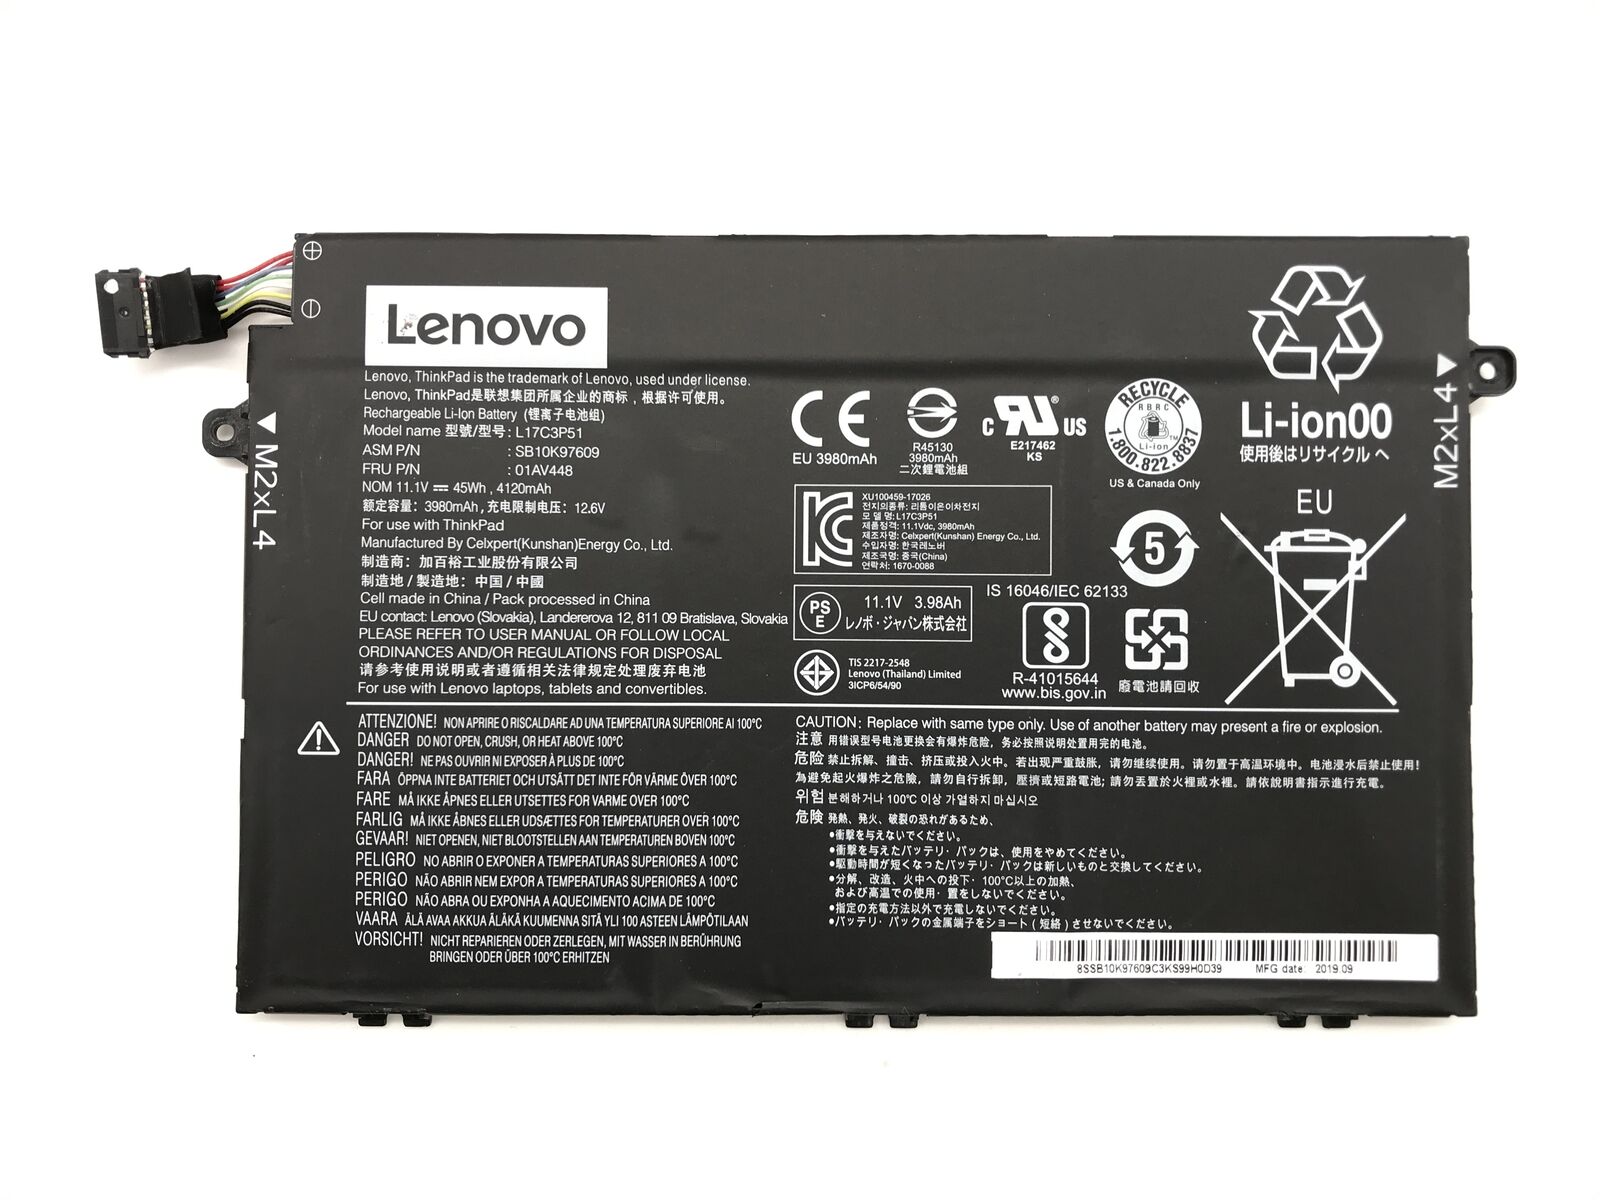 Genuine 01AV448 OEM Battery for Lenovo ThinkPad E480 E490 E580 L17L3P51 L17C3P51